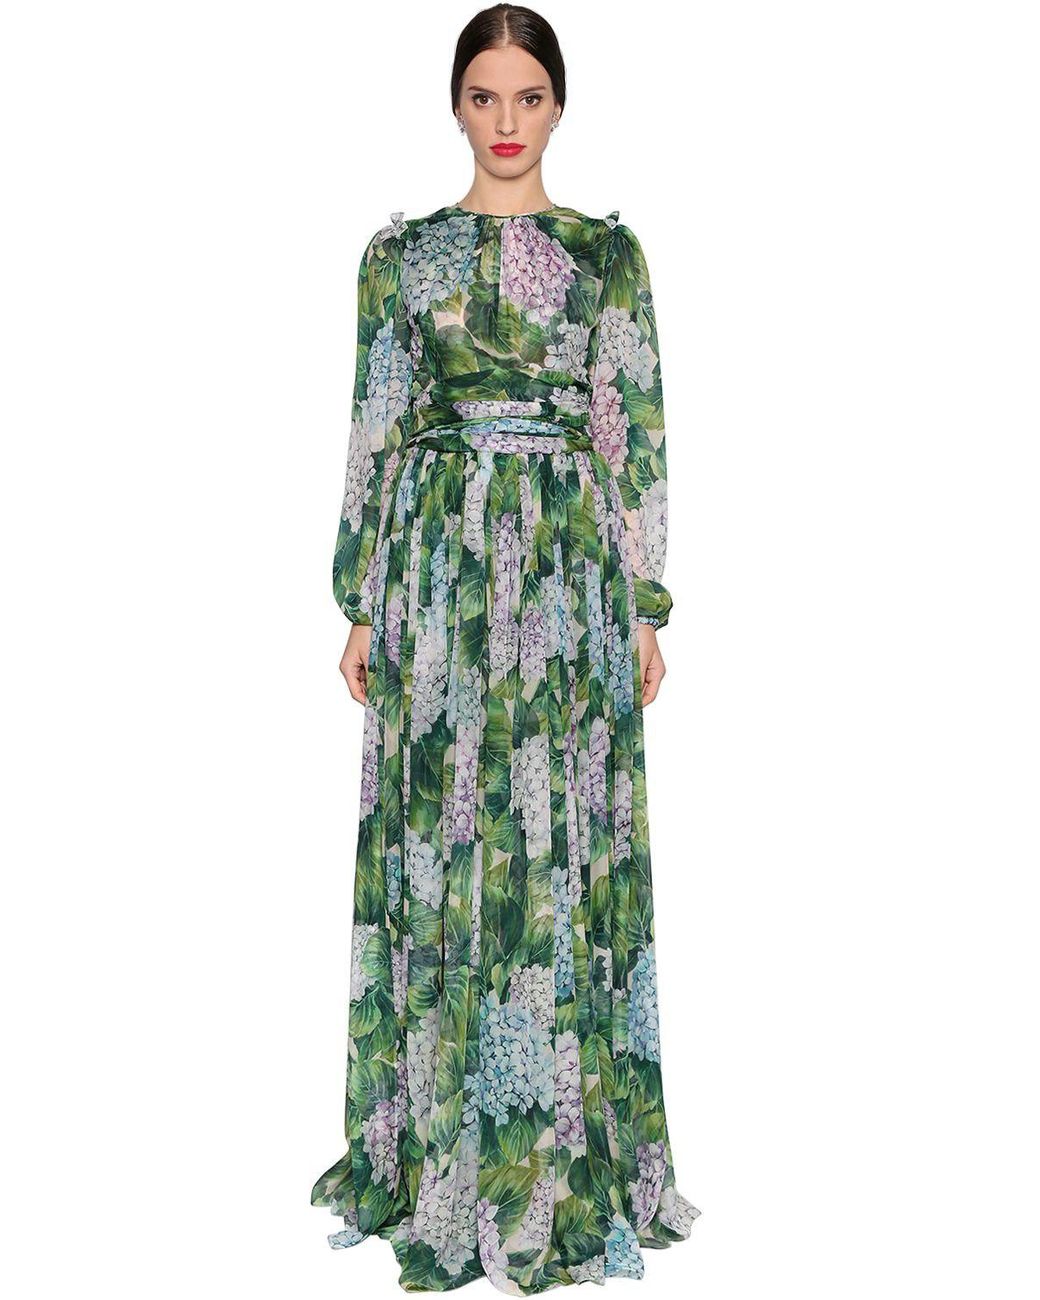 Dolce & Gabbana Hydrangea Printed Silk Chiffon Dress in Green | Lyst